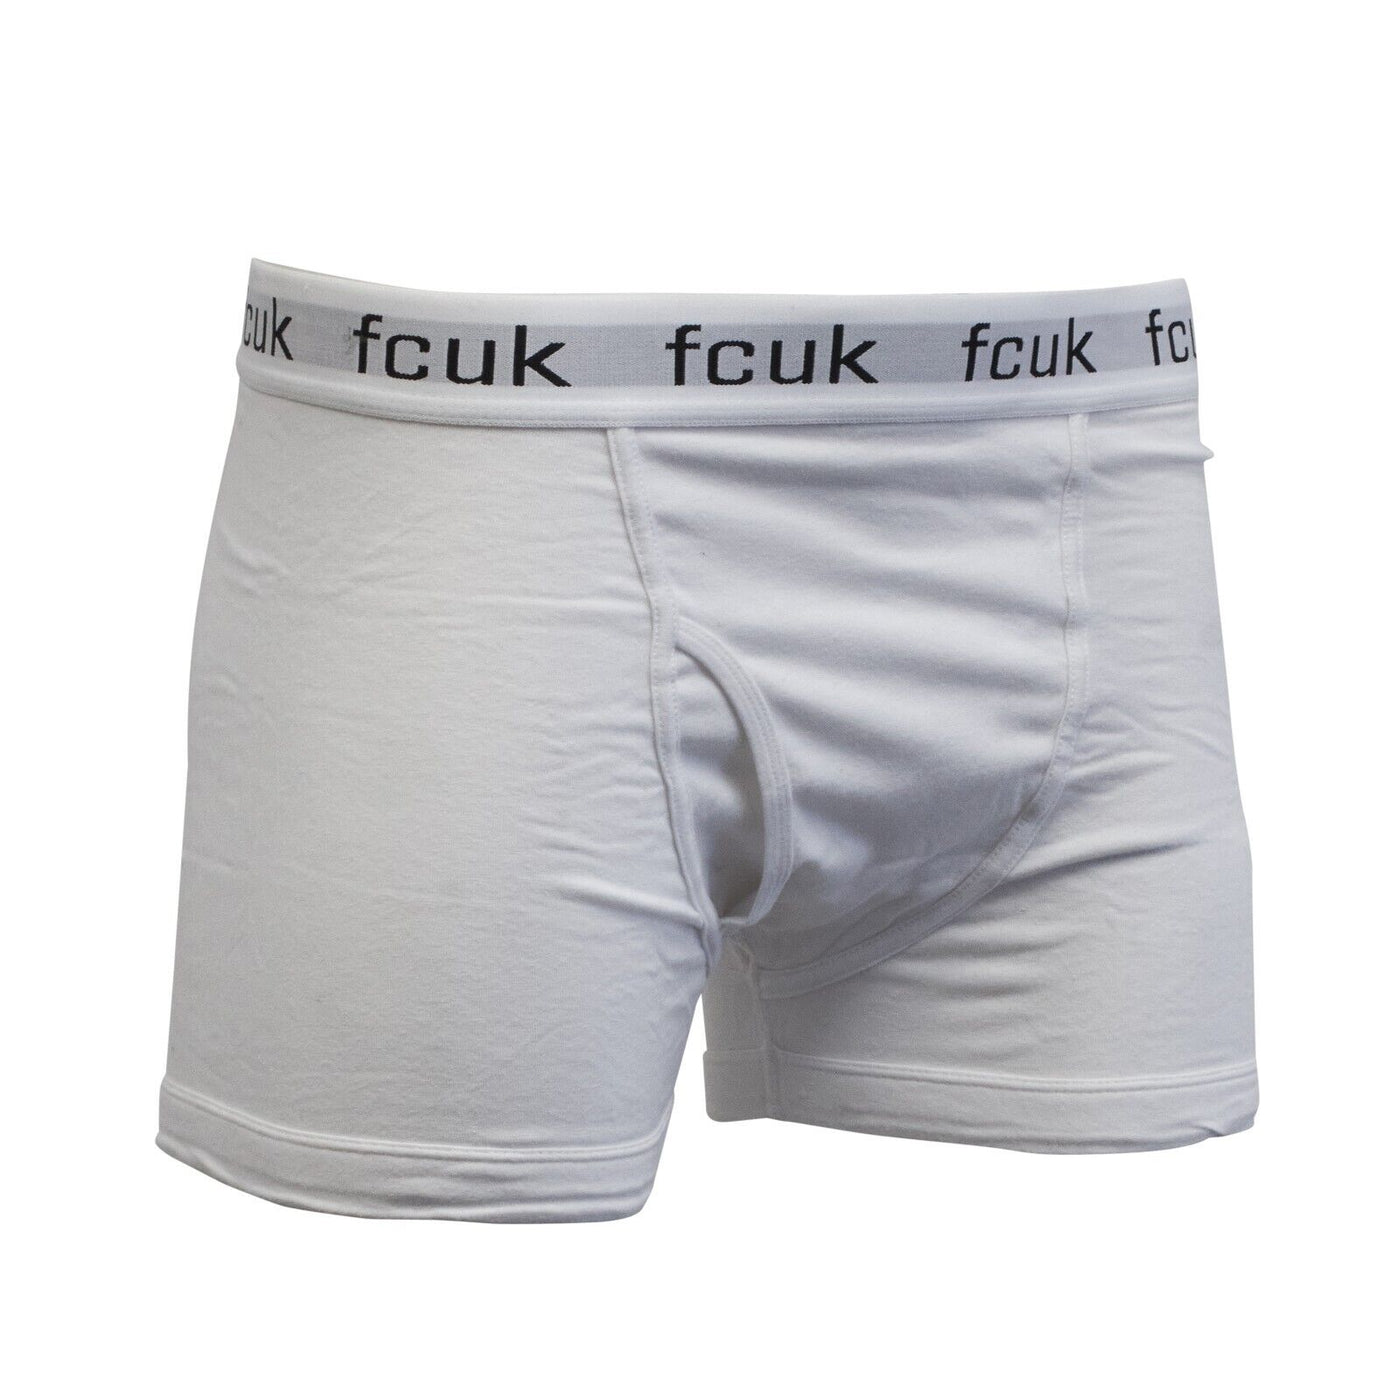 FCUK Men's Blue White Black 3 Pack Boxer Briefs